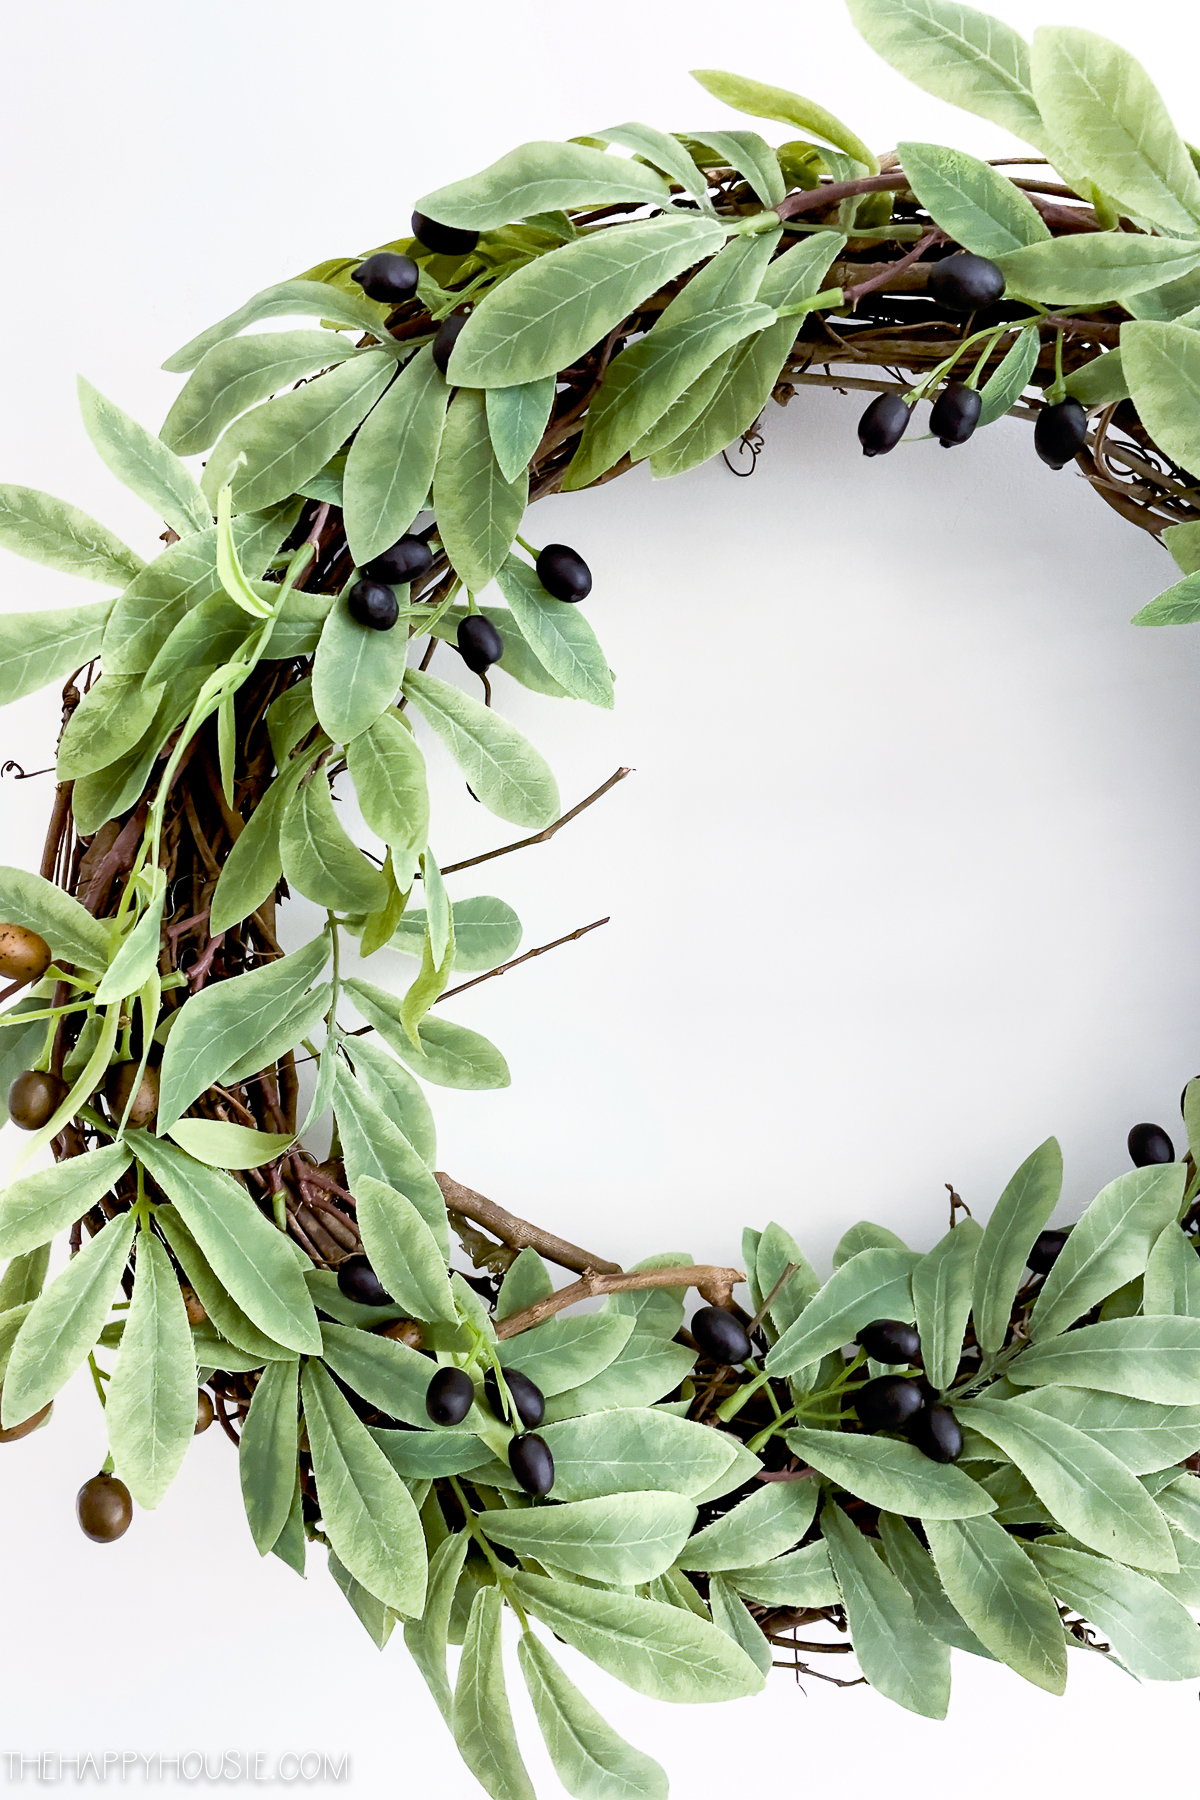 Little black olives on the wreath.